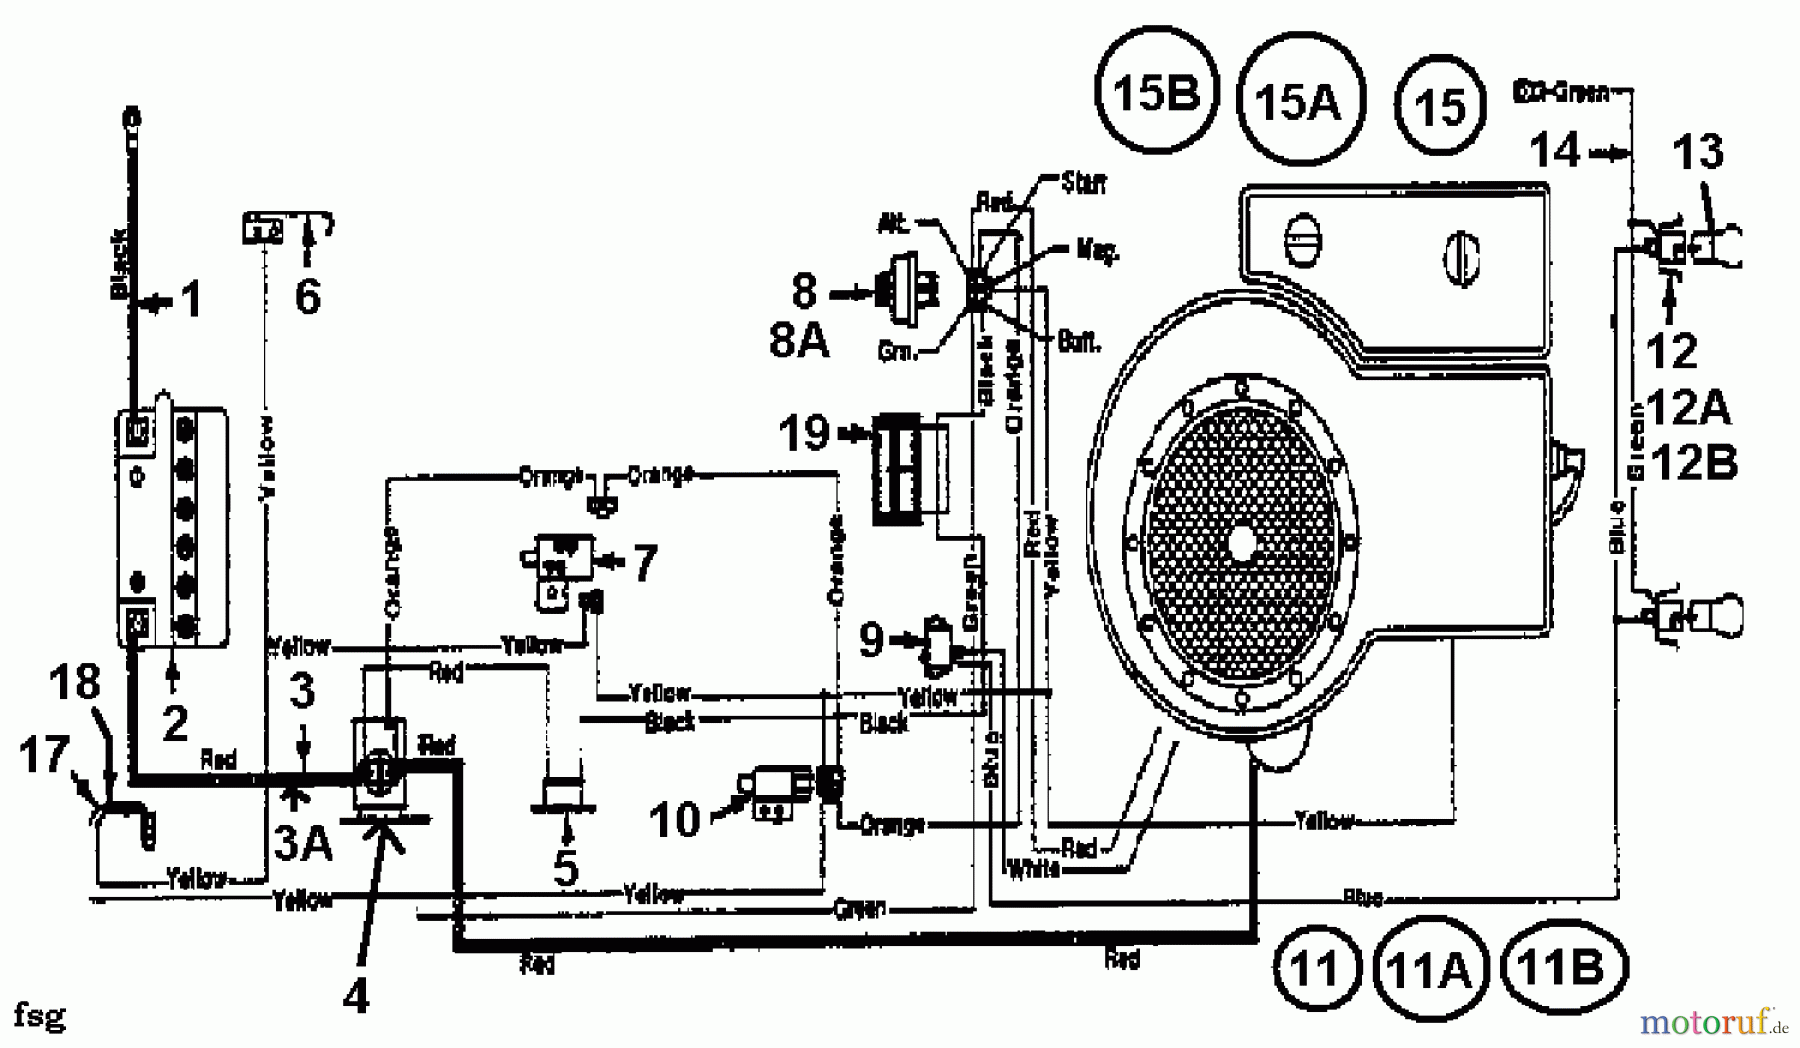  Bauhaus Lawn tractors Gardol Topcut 12/91 133I471E646  (1993) Wiring diagram single cylinder